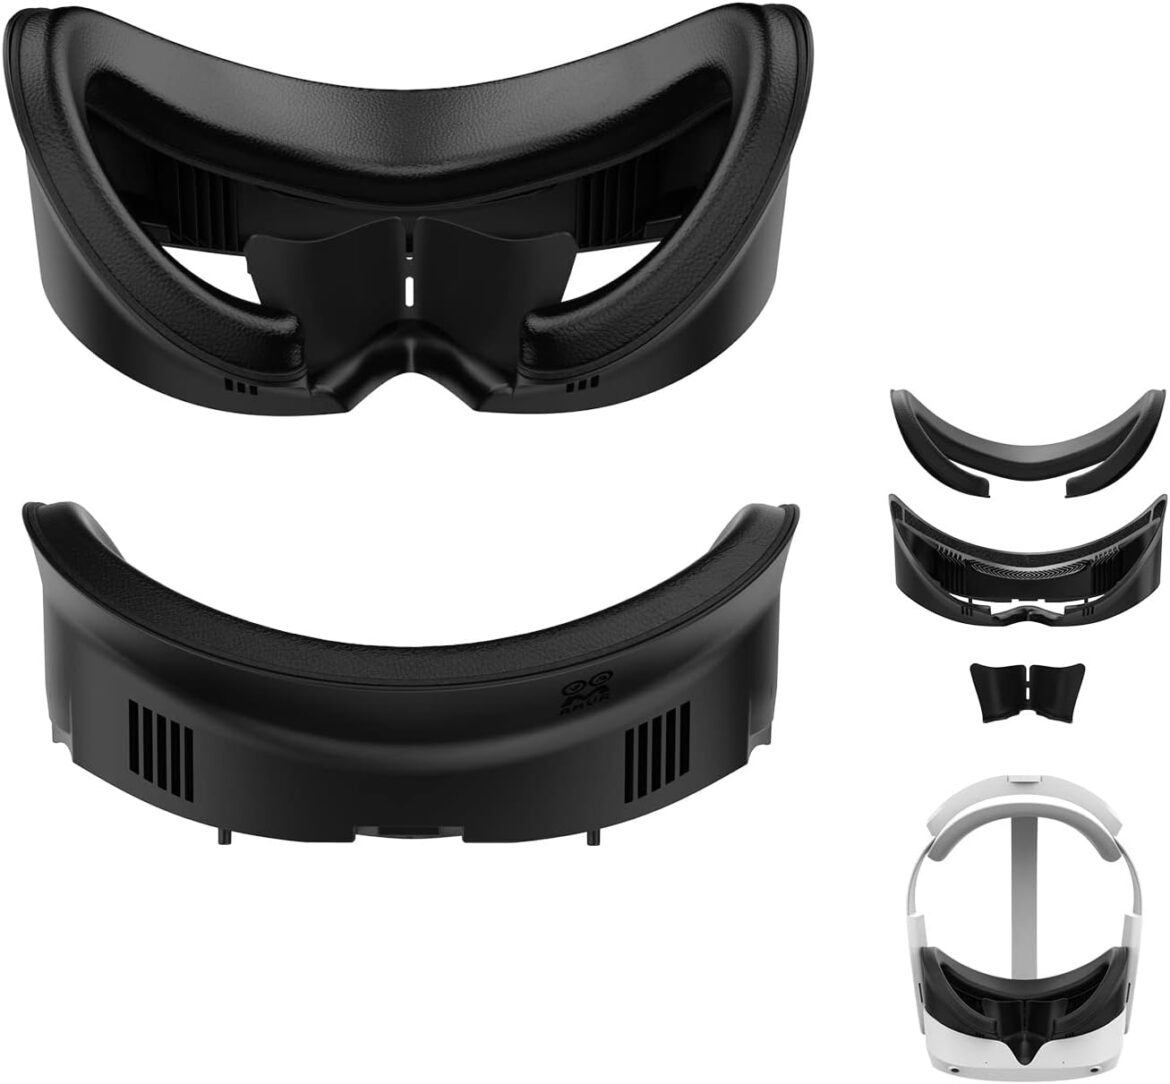 61YBgqWd5HL. AC SL1500 AMVR VR Facial Interface Bracket Face Cover für Pico 4 - Komfort und Hygiene für Virtual Reality im Test